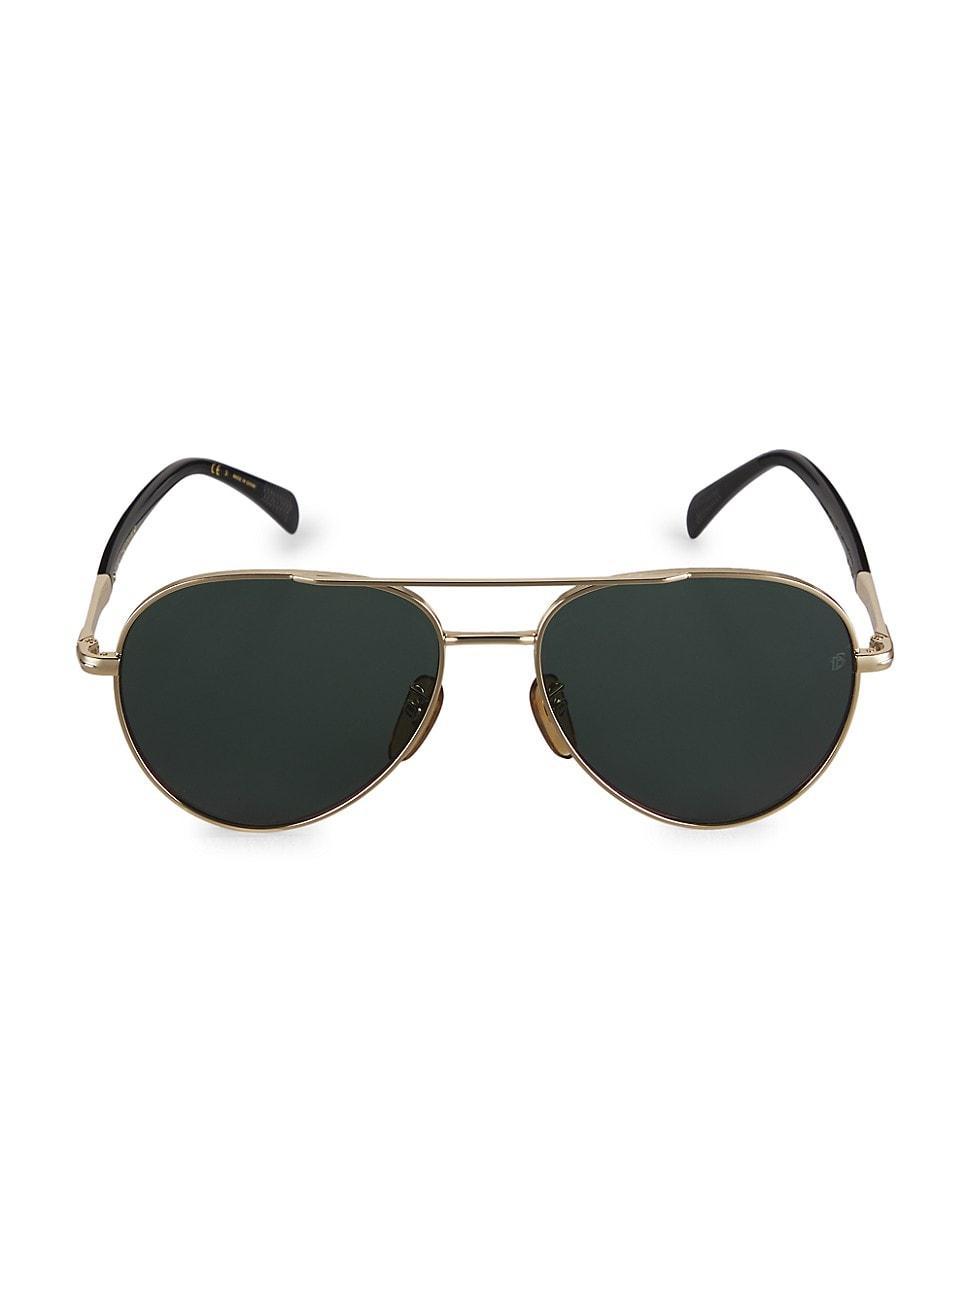 David Beckham Eyewear 59mm Aviator Sunglasses Product Image